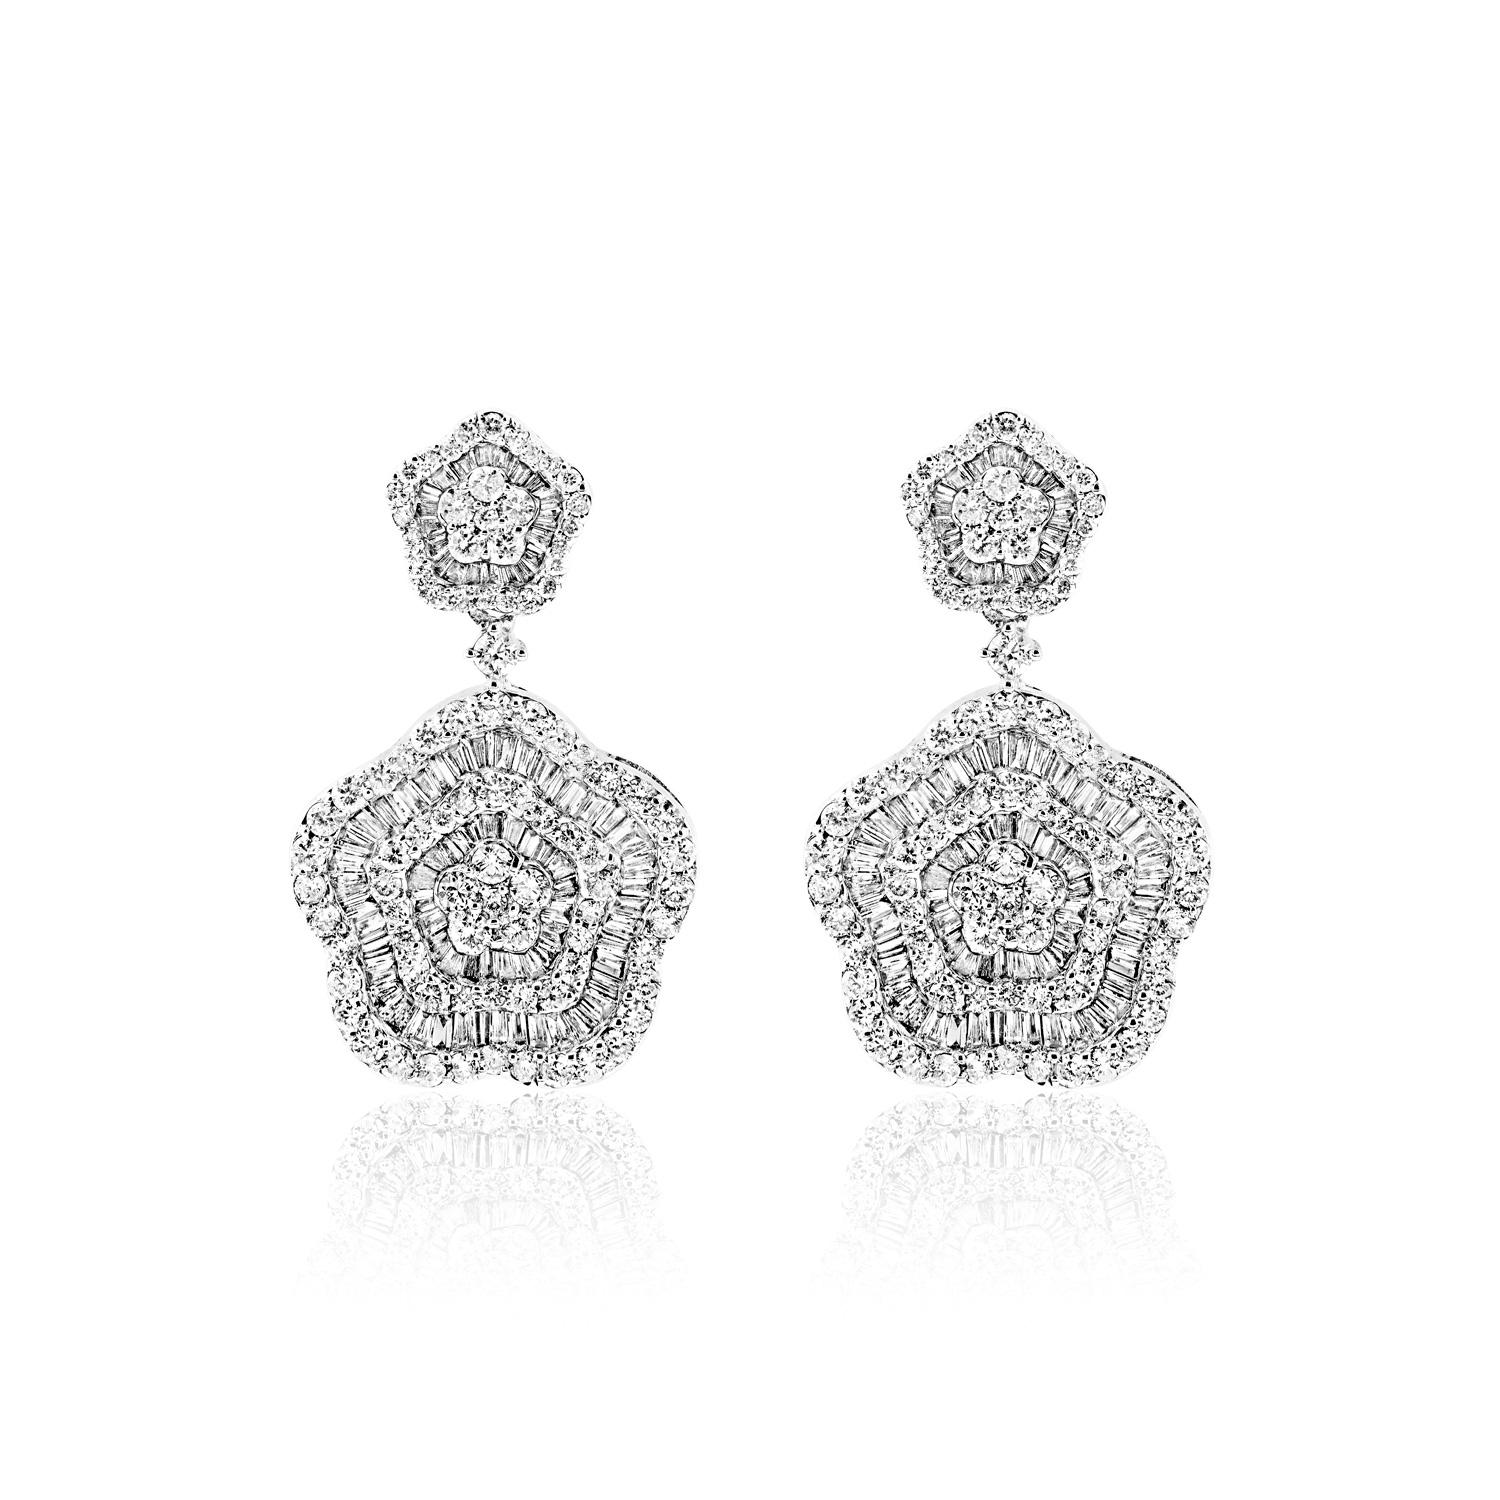 Diamond Hanging Earrings:
Carat Weight: 4.59 Carats
Diamond Shape: Combine Mix Shape
Metal: 14 Karat White Gold
Hanging Diamonds